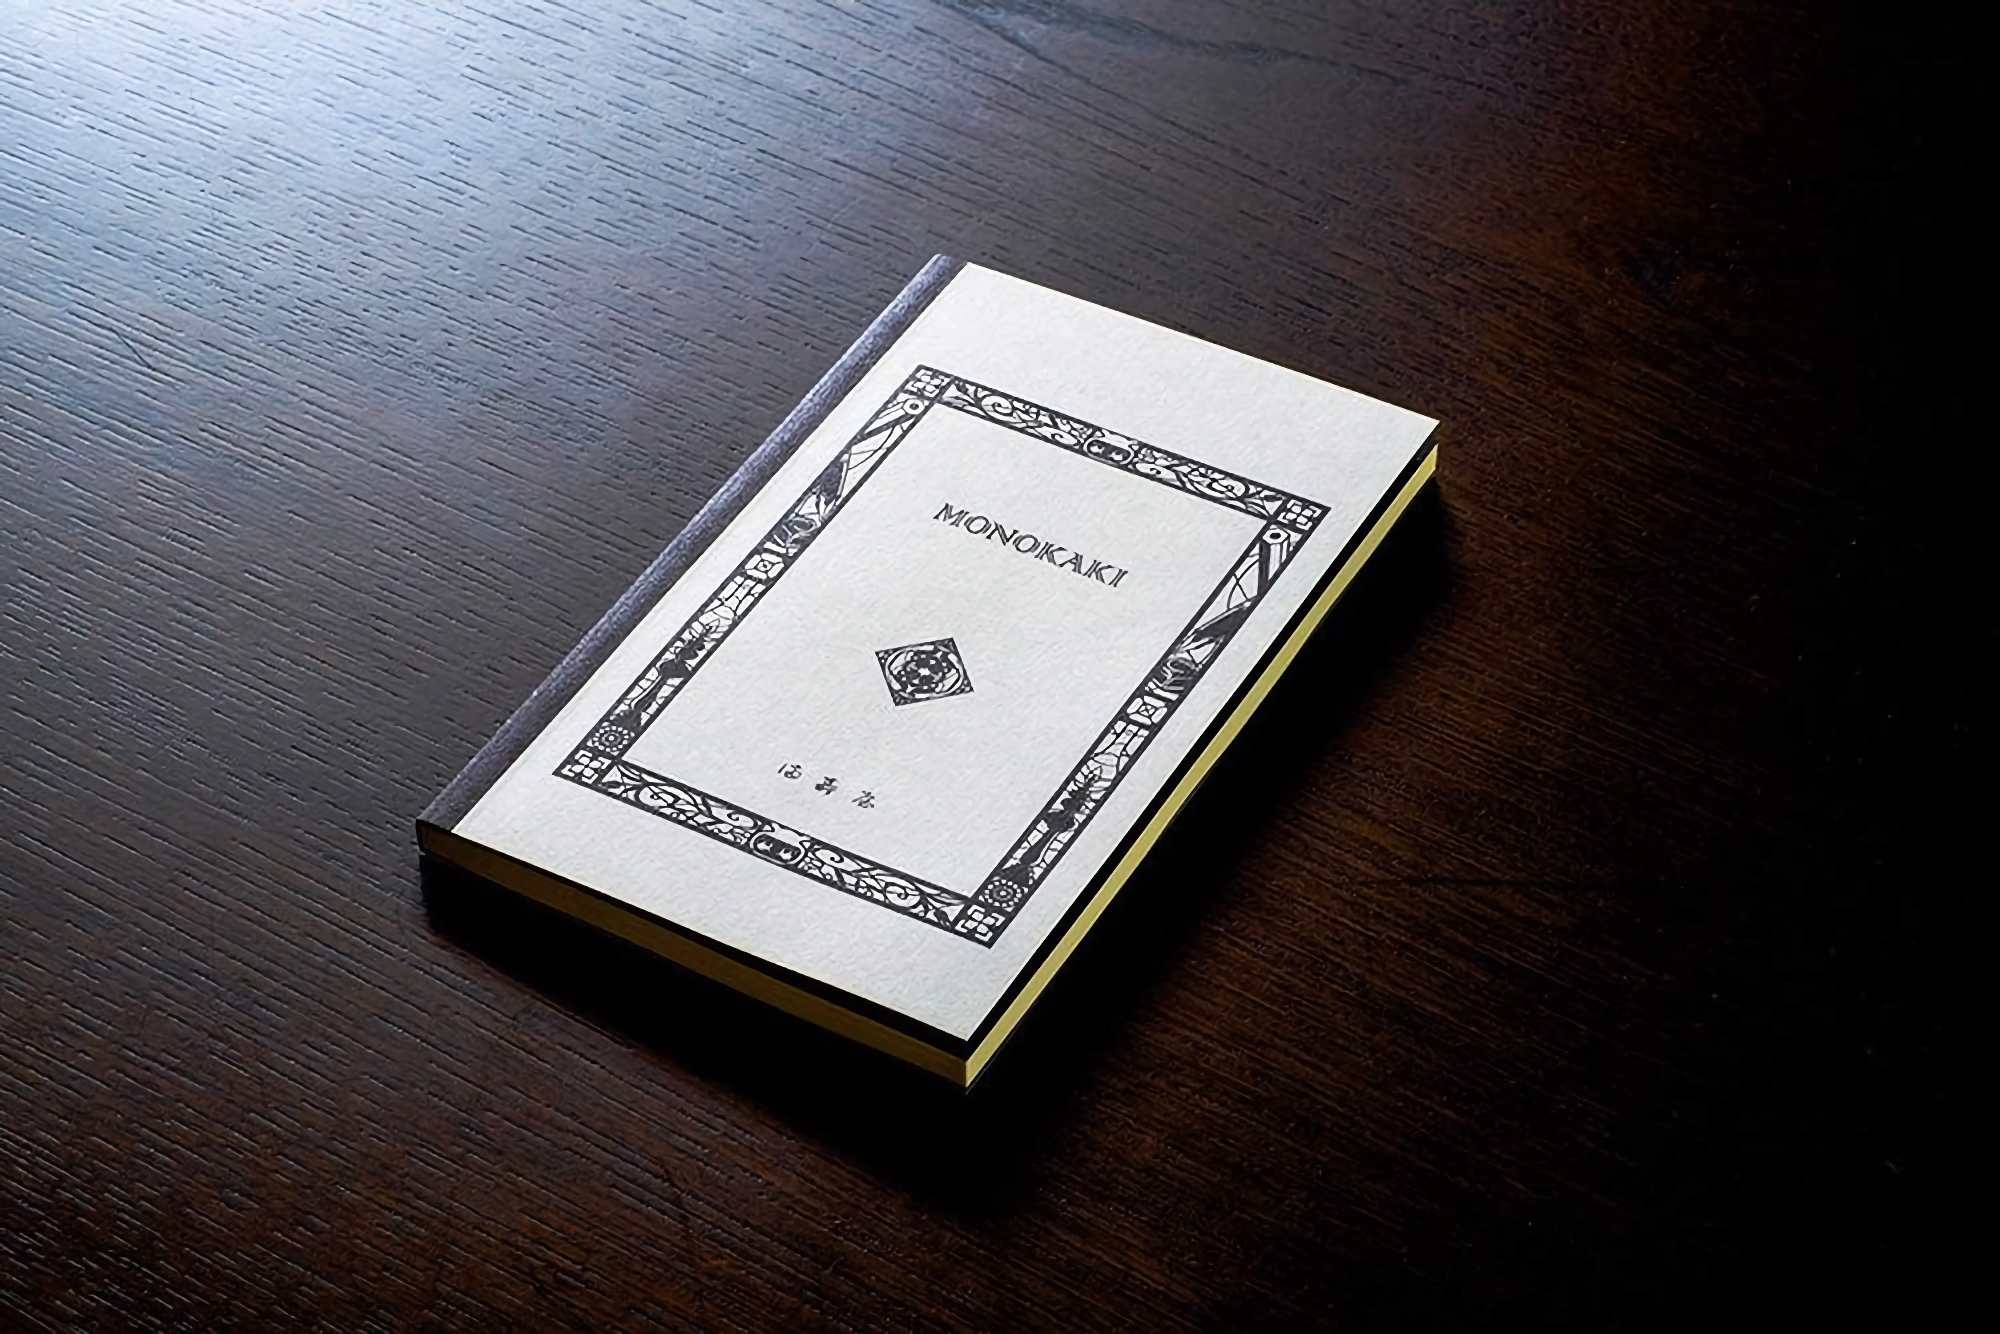 Masuya Monokaki Notebook Pocket Size Blank